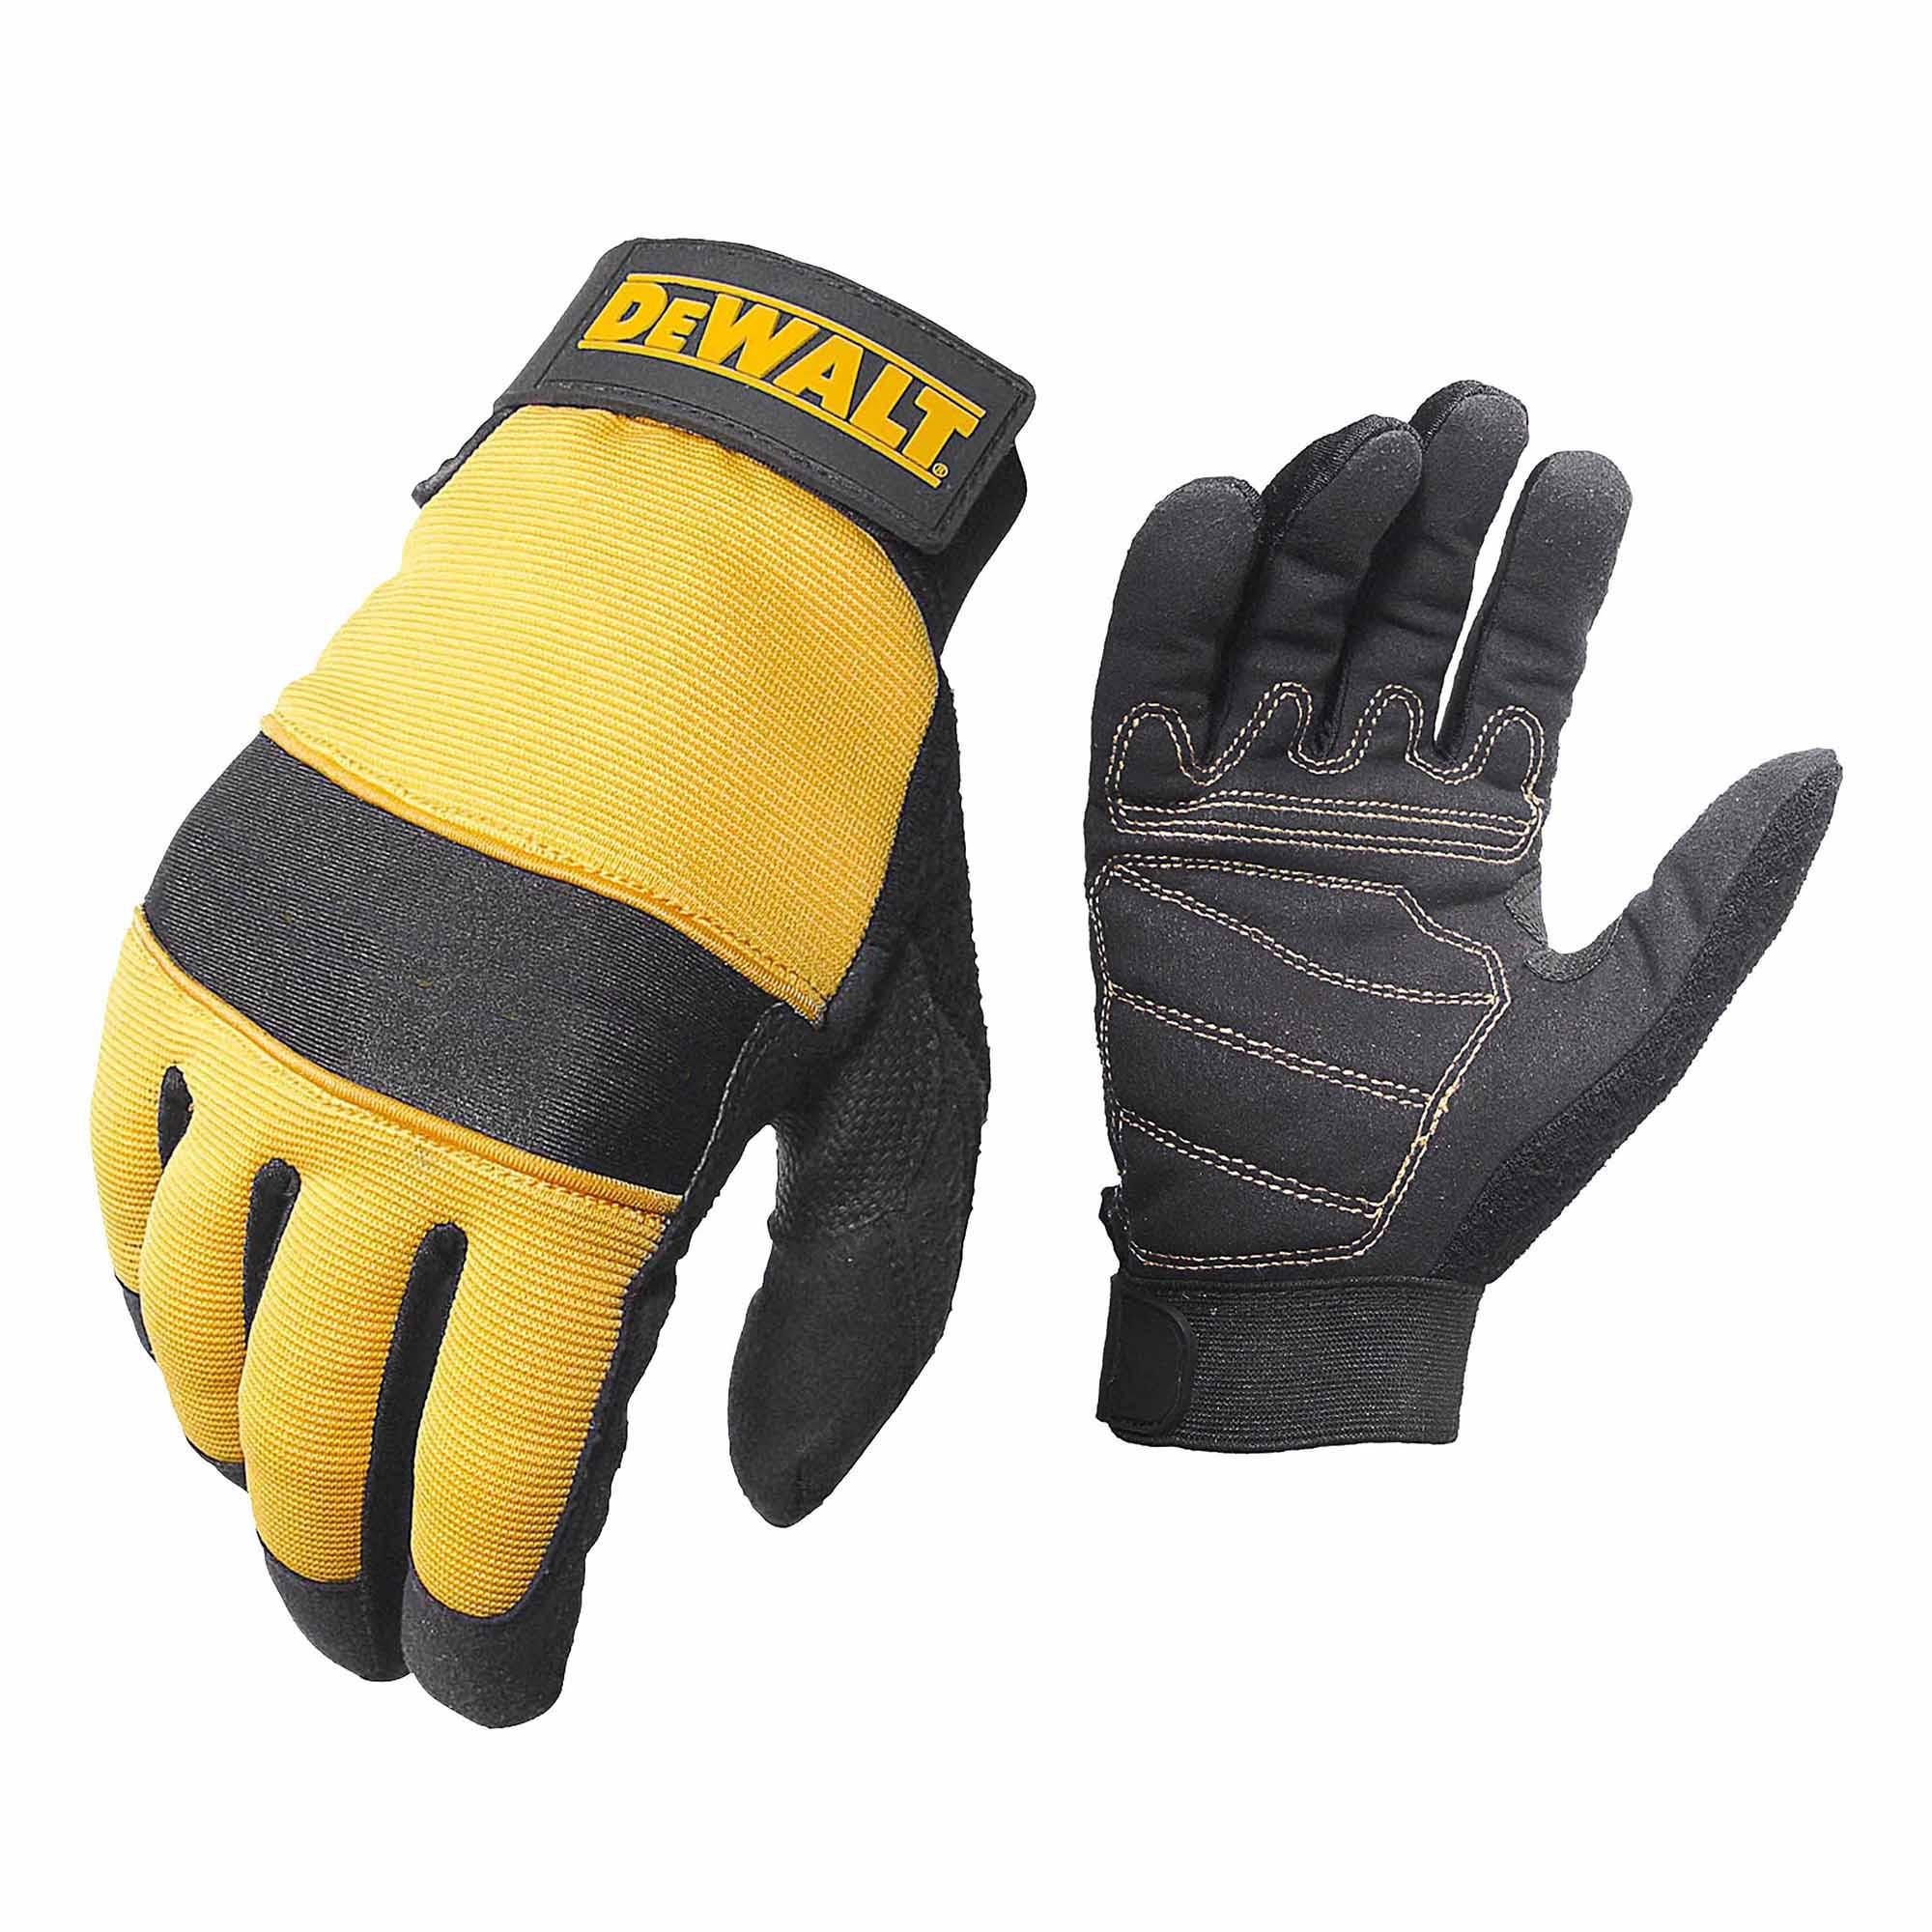 DeWALT Work Gloves Leather Palm Heavy Duty Size Large DPG41-2 Pair 